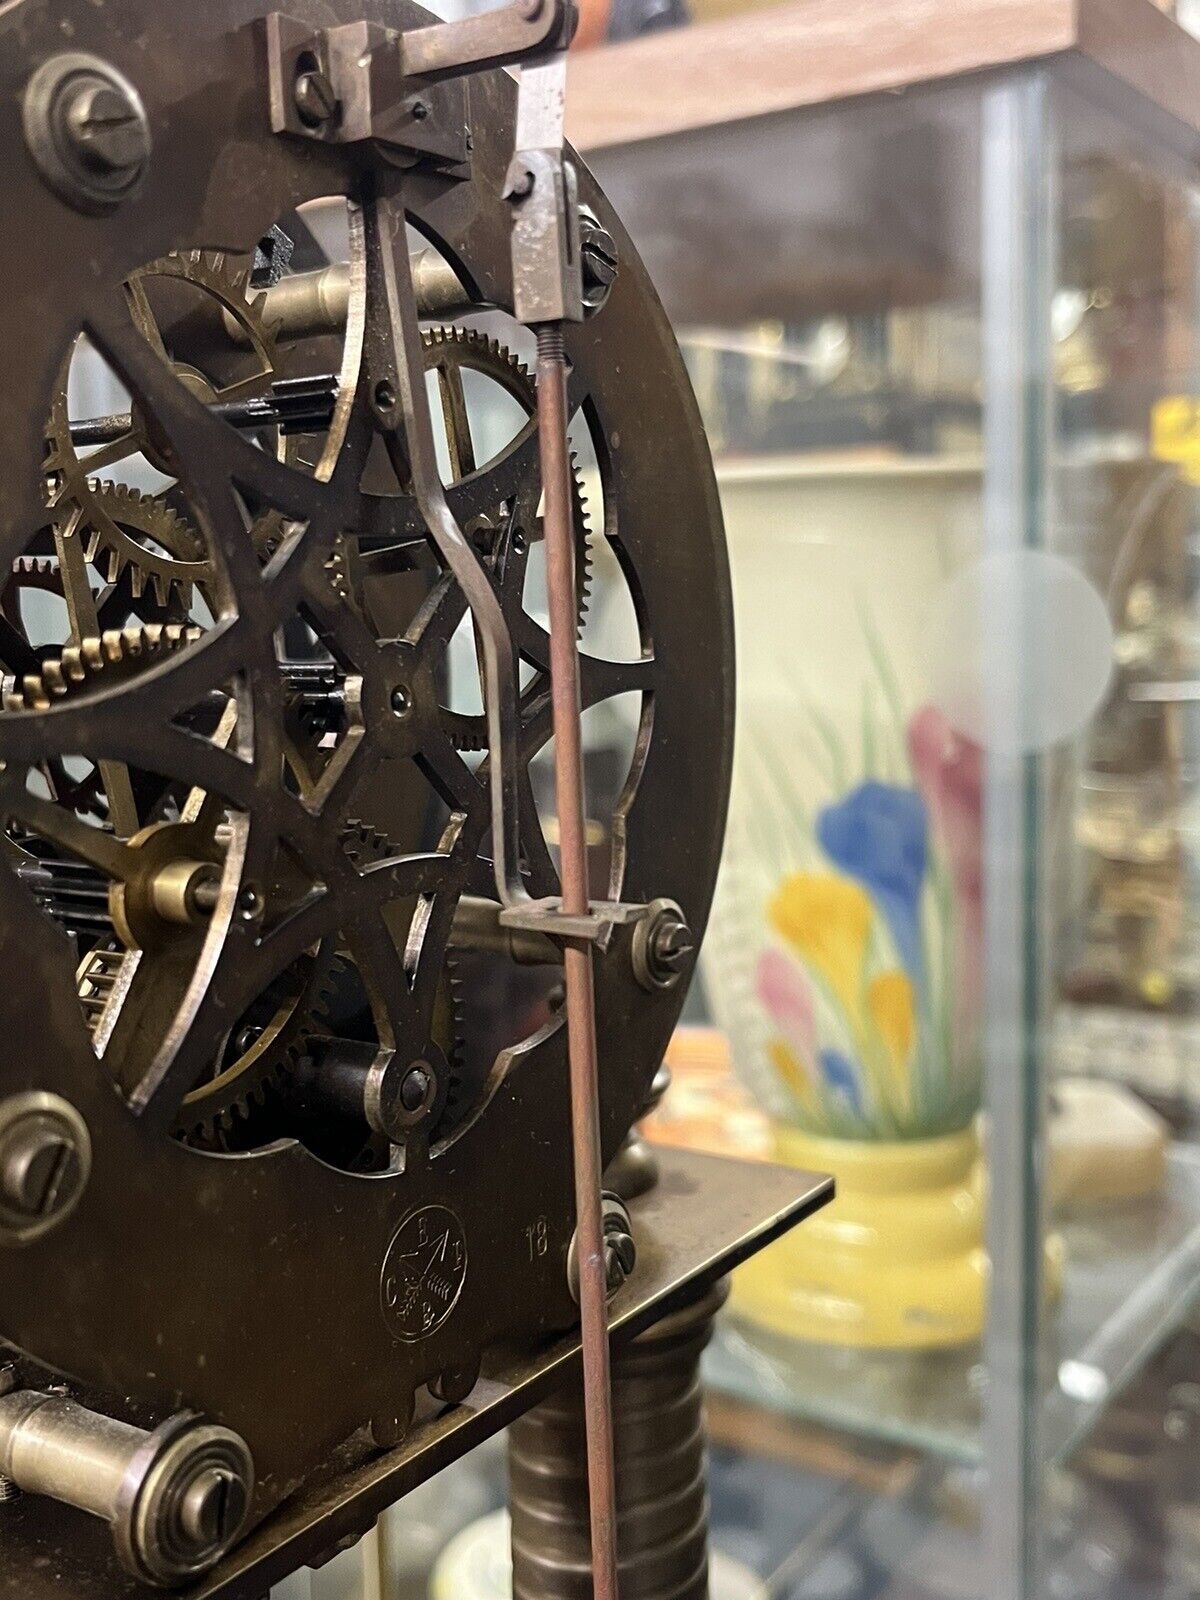 Skeleton Clock With Case And Key. Large & Impressive